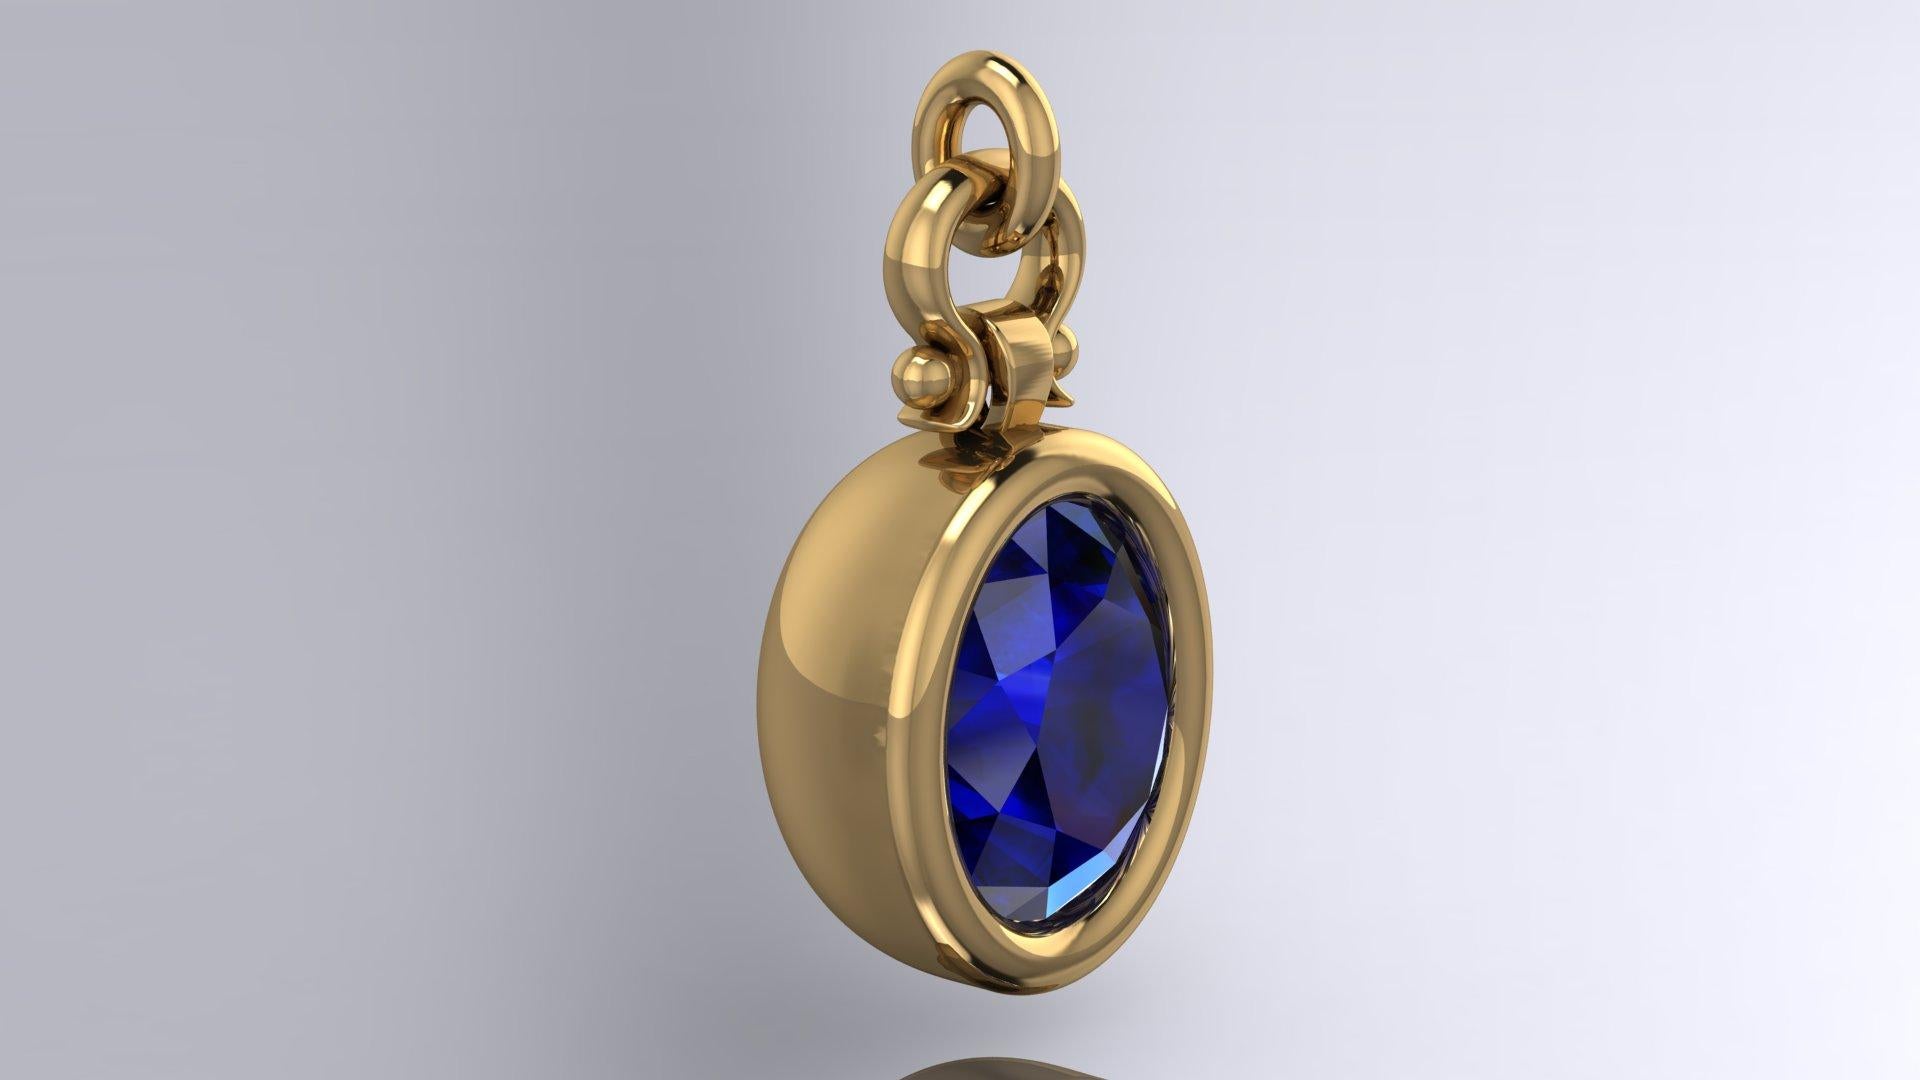 Contemporary Berberyn Certified 4.66 Carat Oval Blue Sapphire Custom Pendant Necklace in 18k For Sale